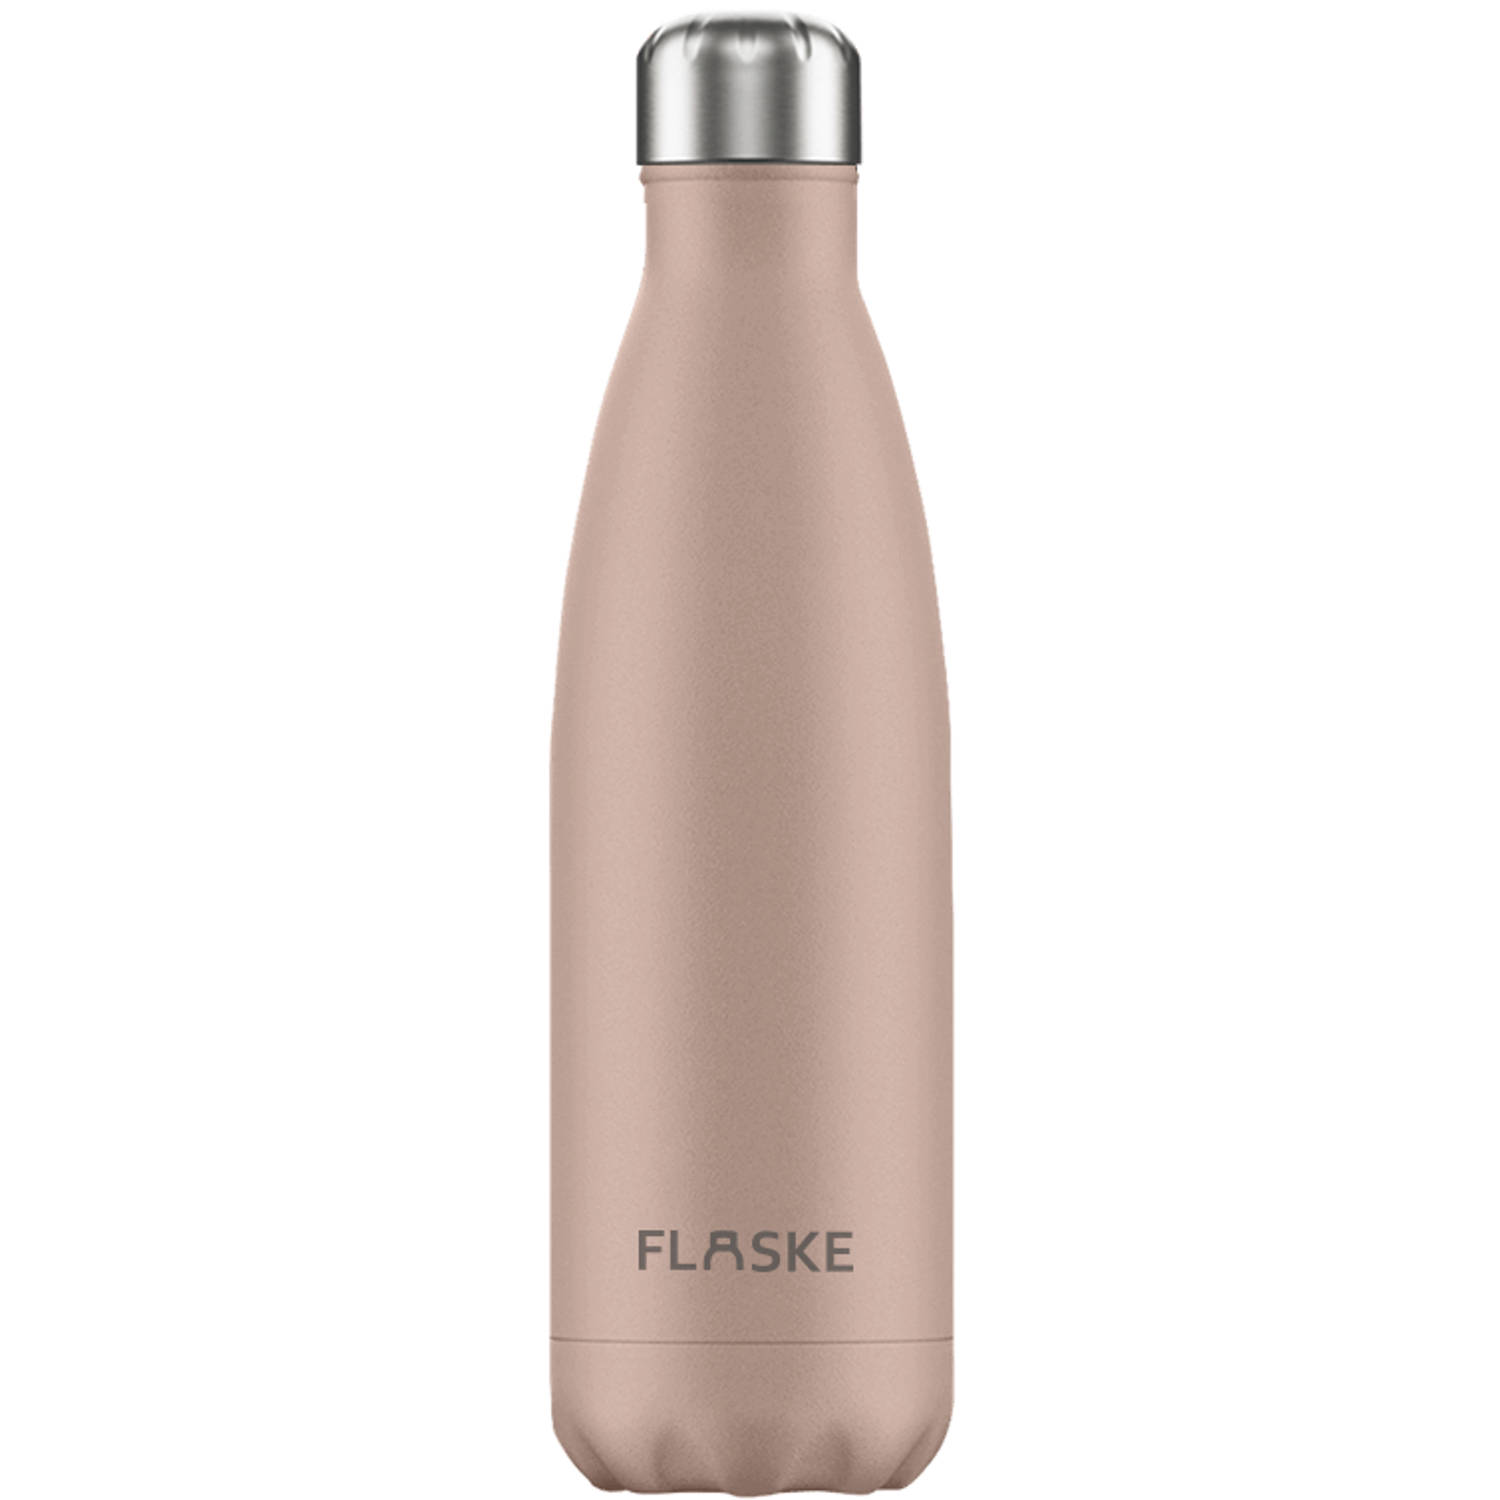 FLASKE Cloud - RVS Drinkfles van 500ML - Geschikt als waterfles, thermosfles en thermoskan